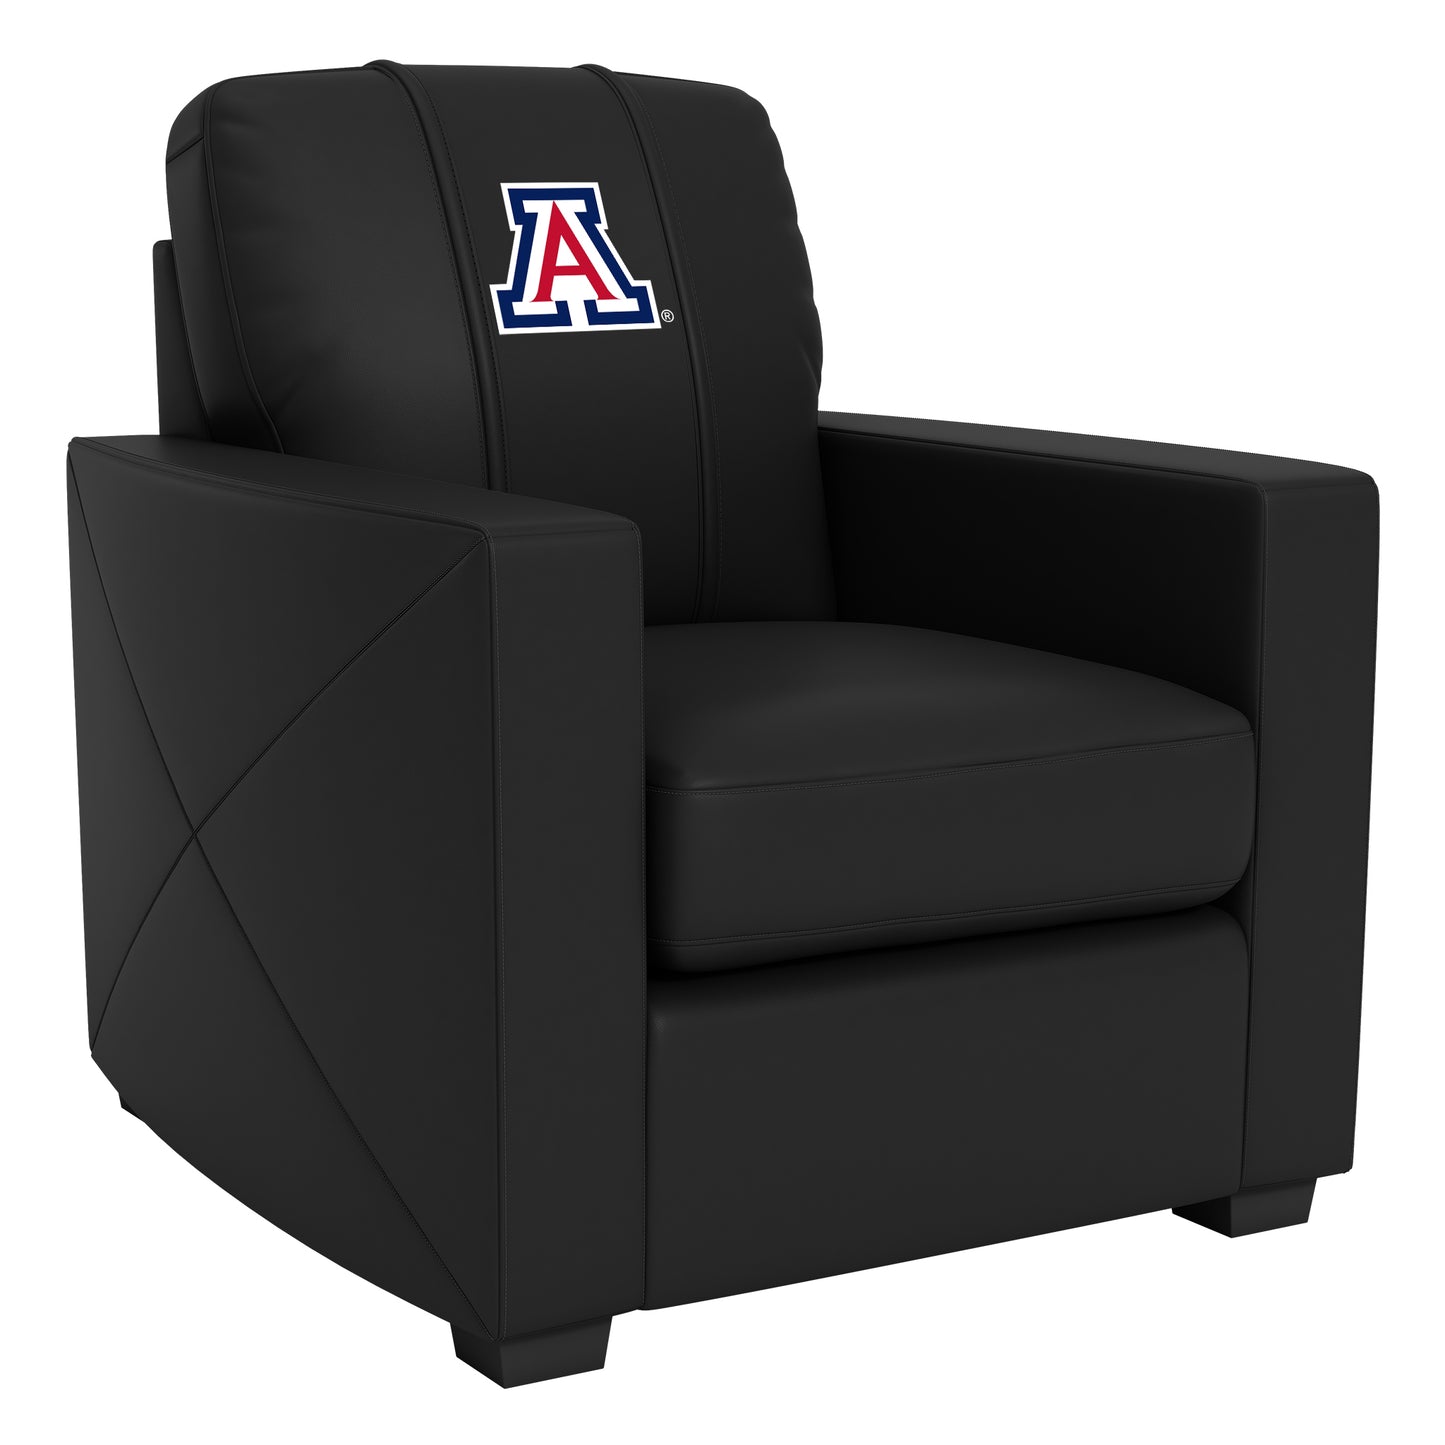 Silver Club Chair with Arizona Wildcats Logo